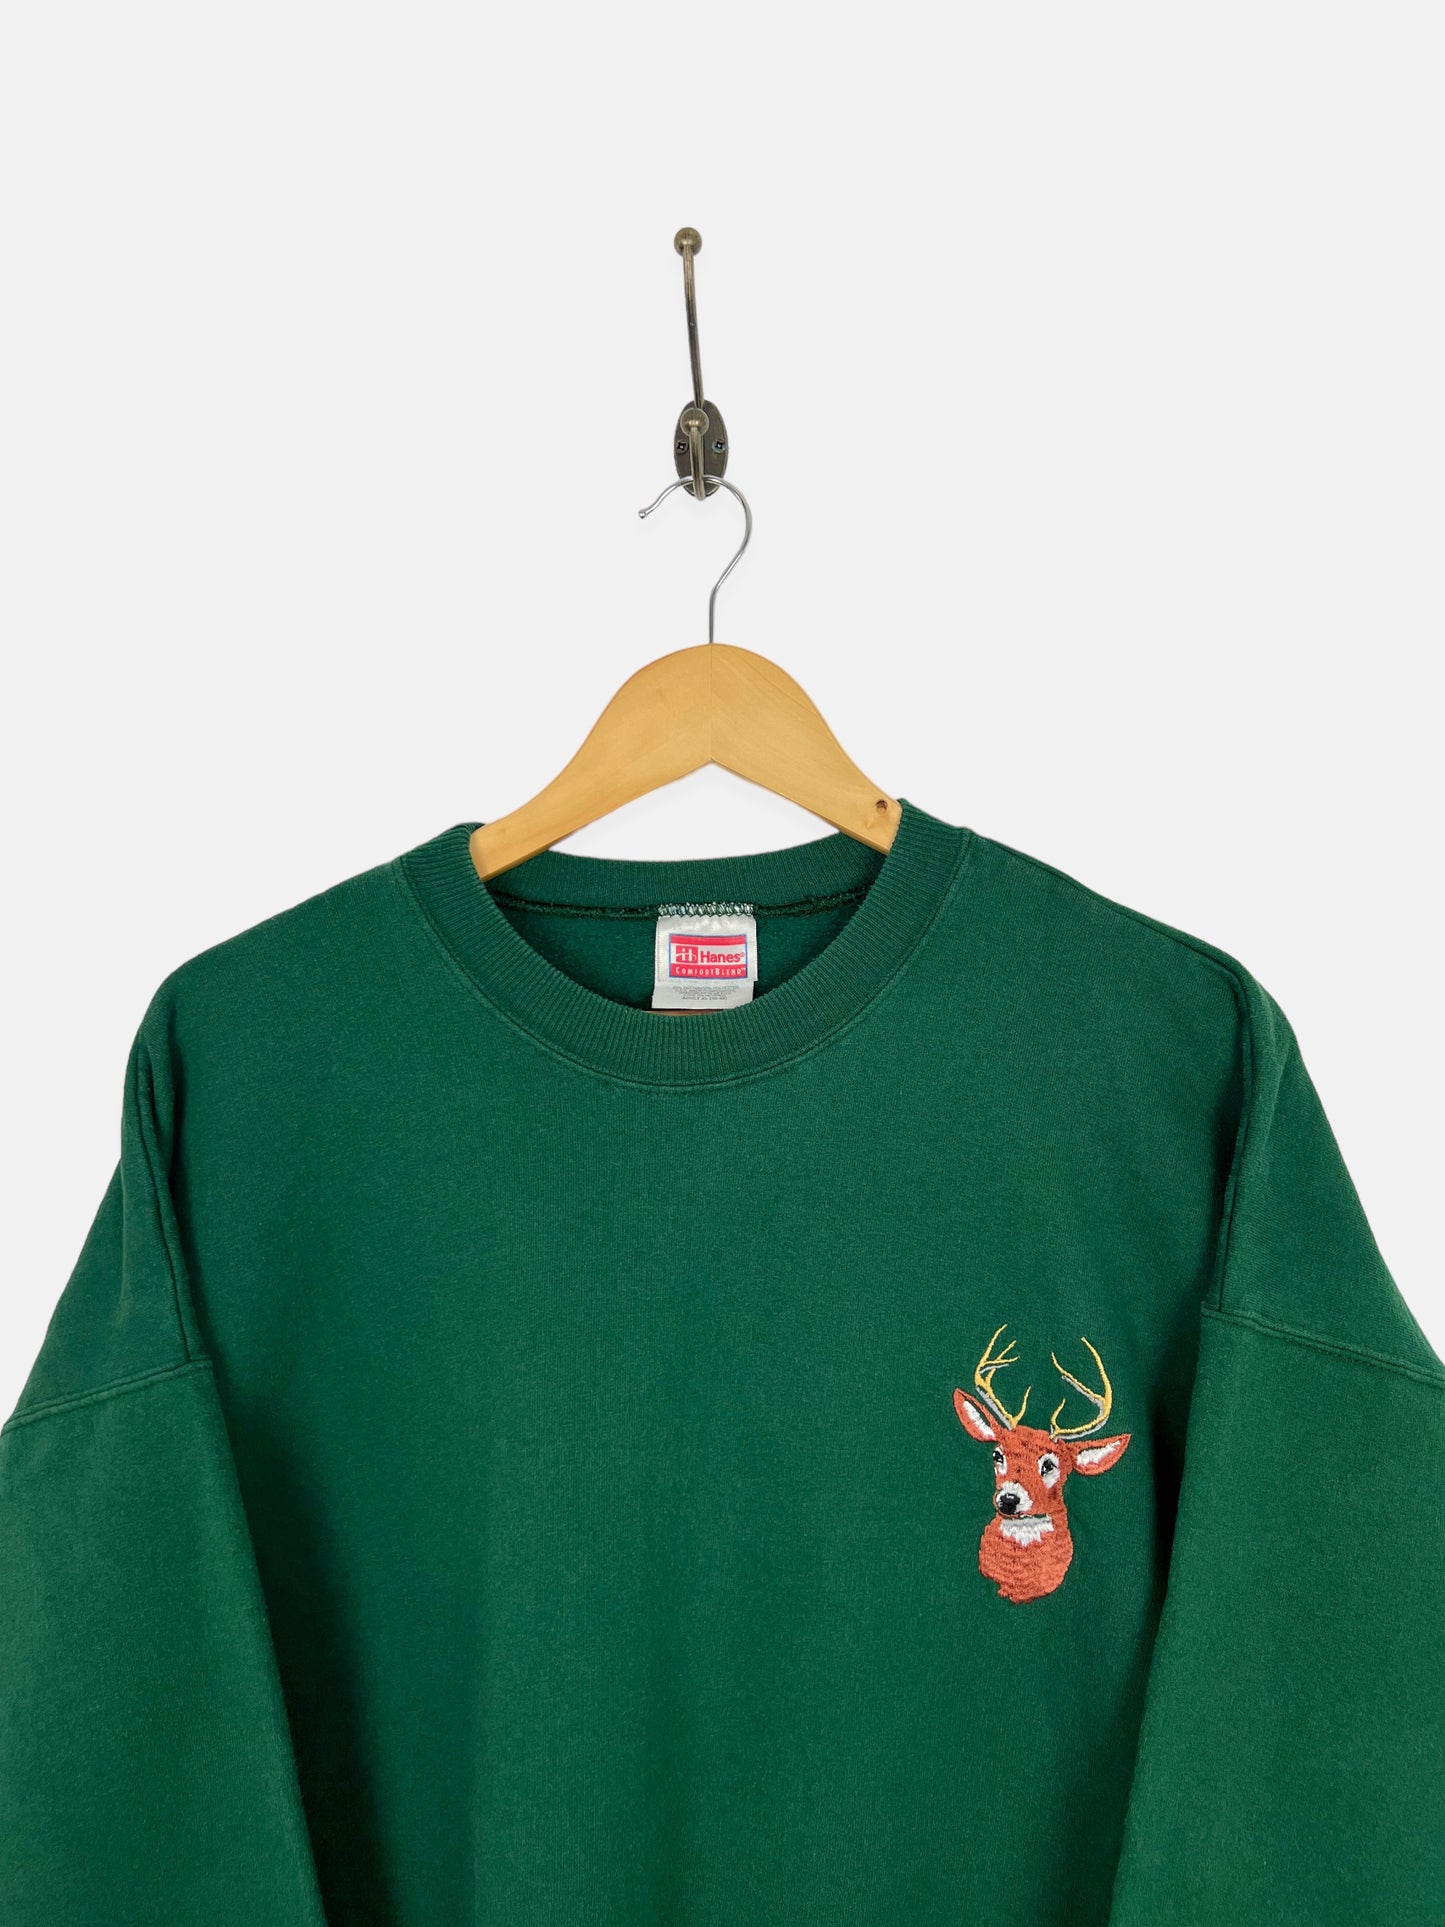 90's Big Buck Embroidered Vintage Sweatshirt Size L